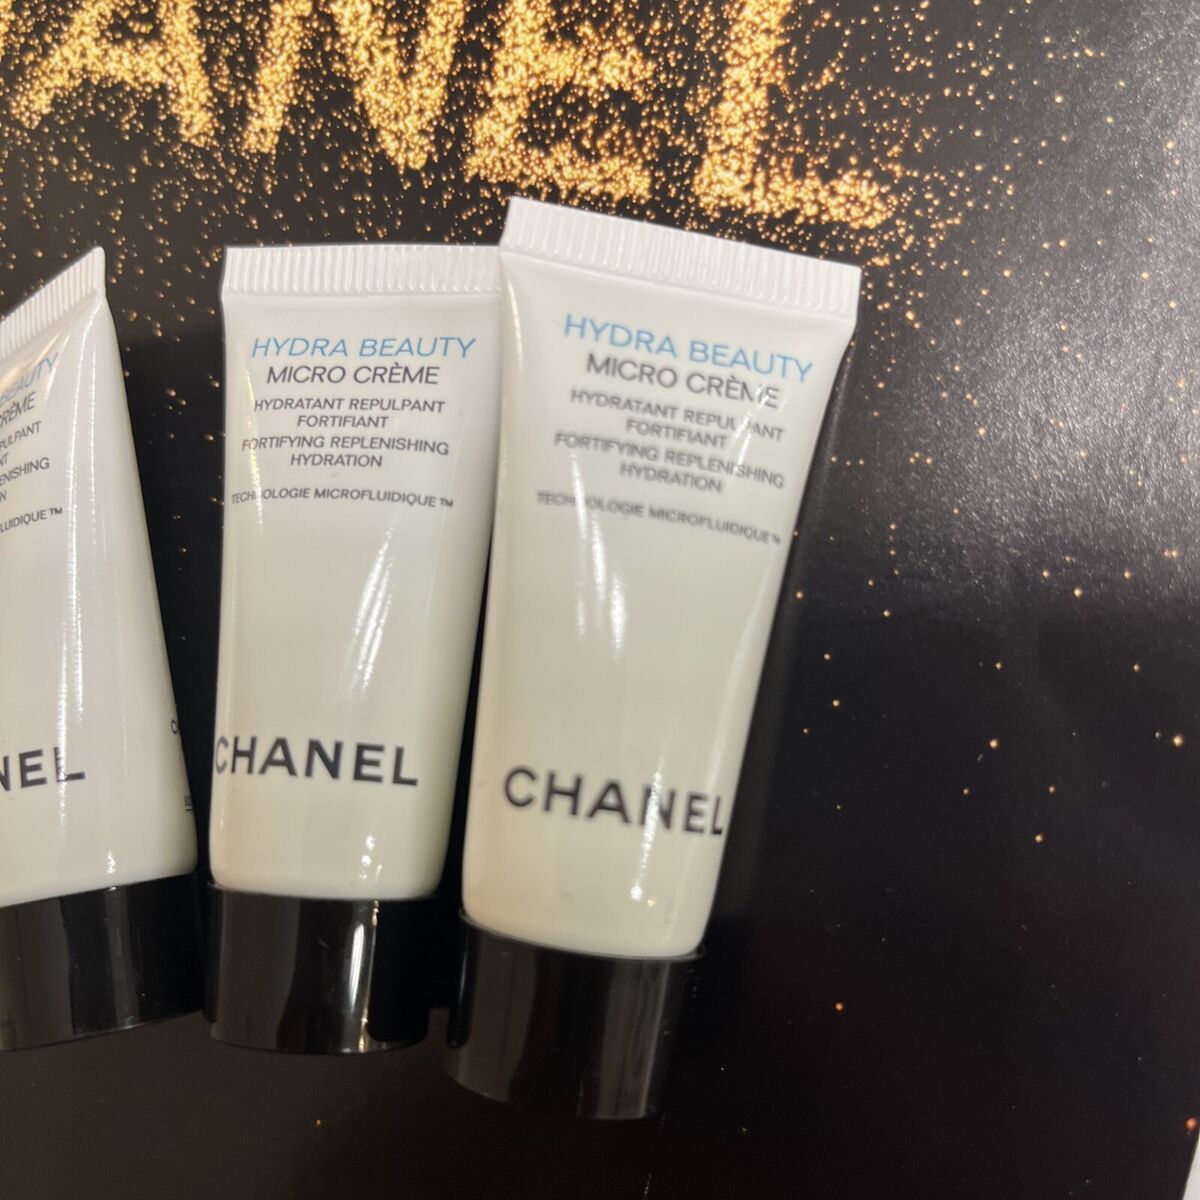 3 x Chanel Hydra Beauty Micro Cream 5ml / 0.17oz each= Total 15 ml